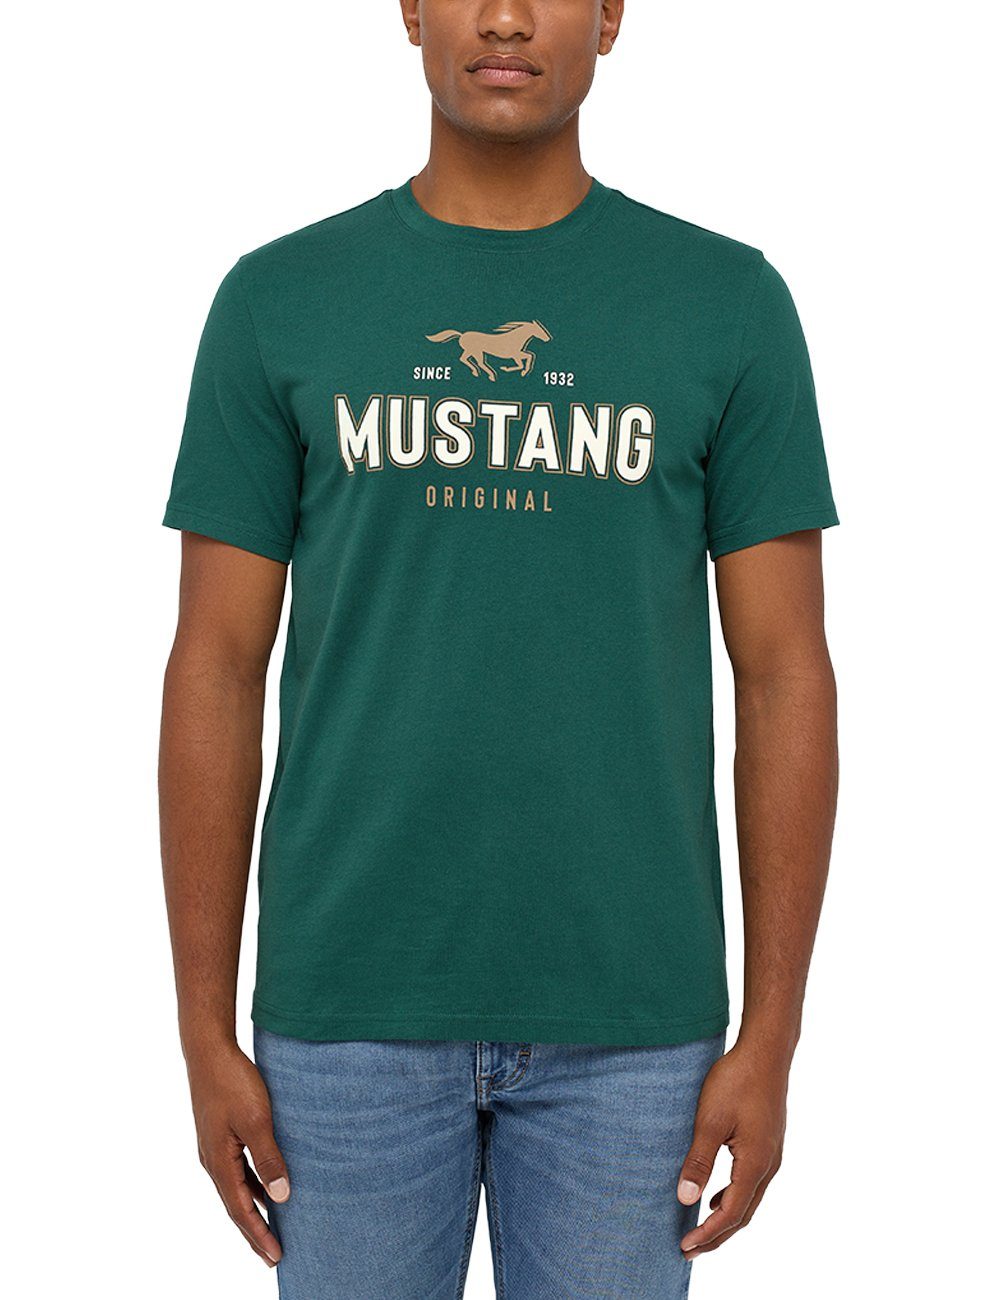 Print-Shirt Kurzarmshirt grün MUSTANG Mustang